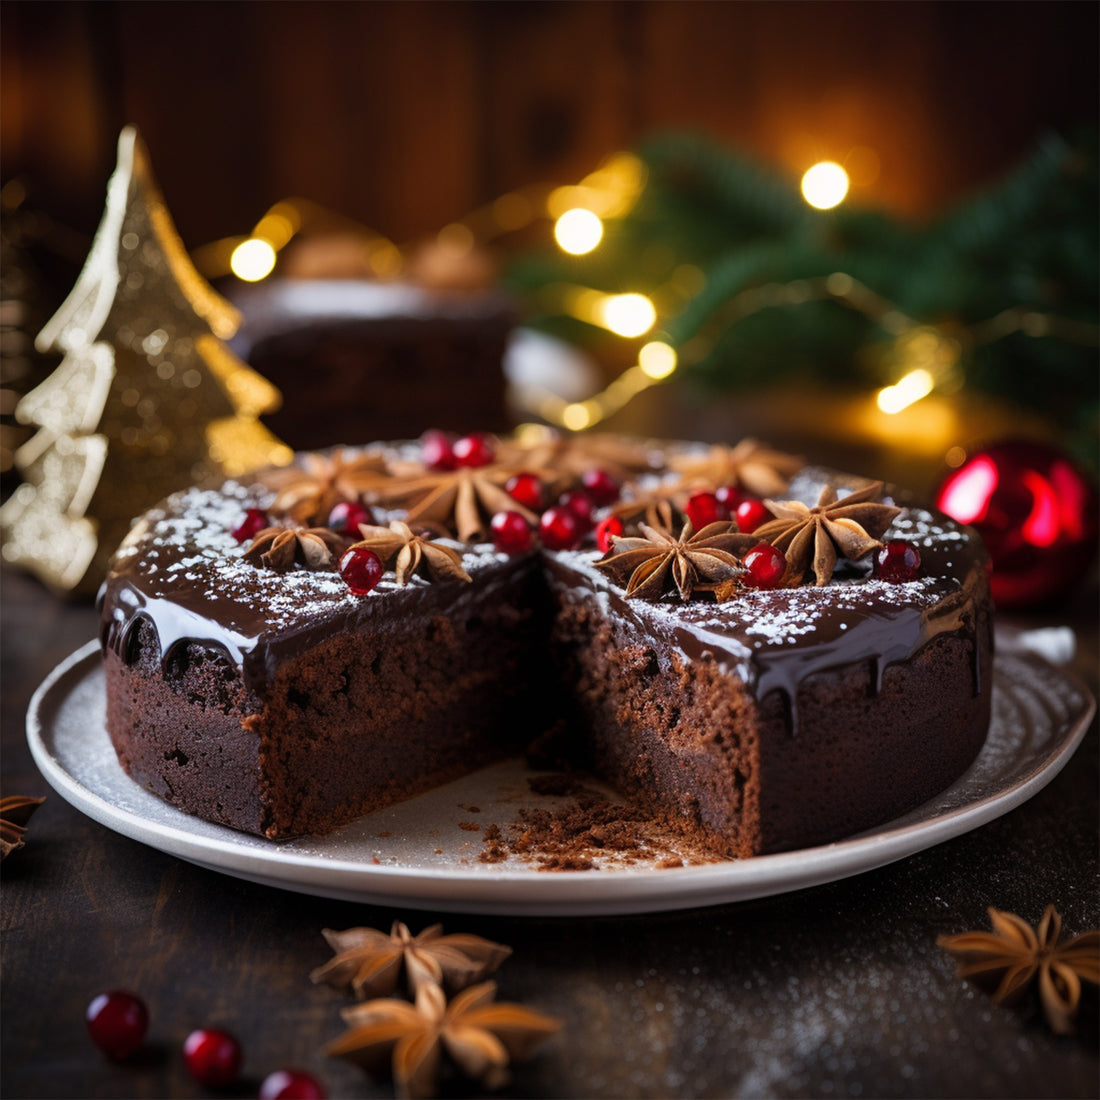 Spiced Chocolate Christmas Cake with Brandy